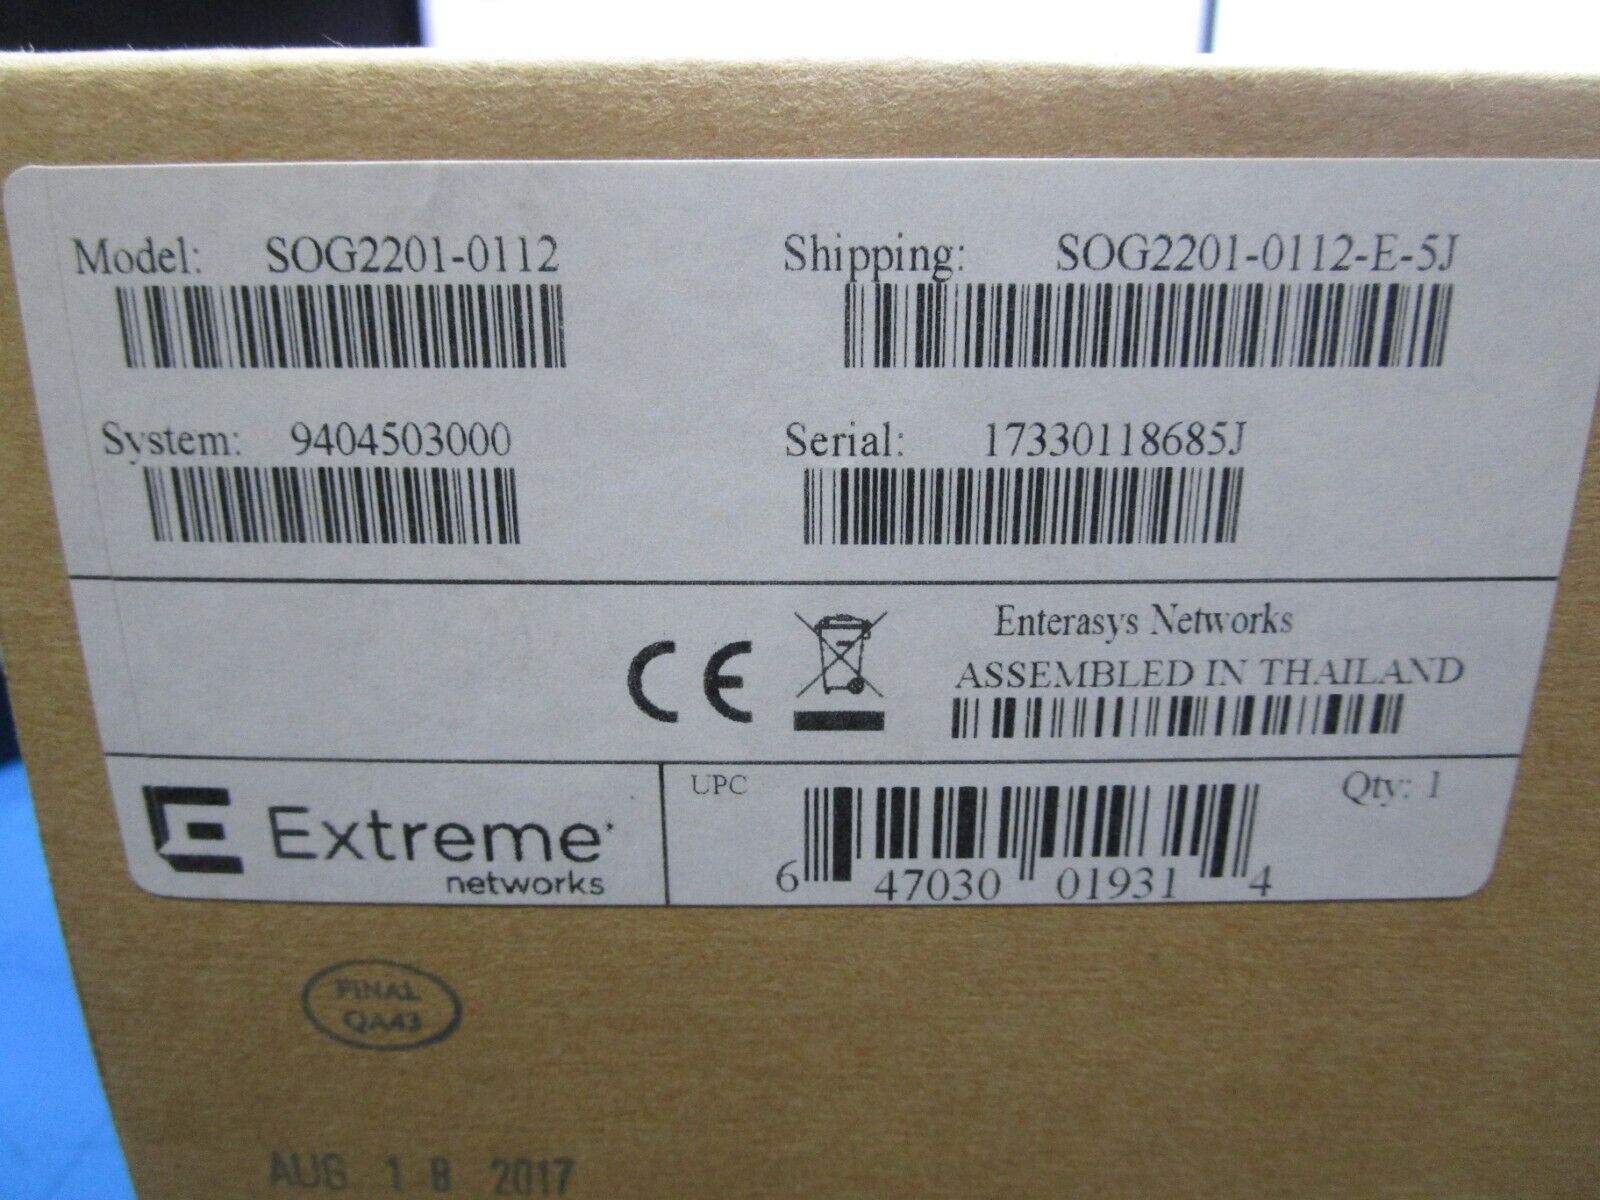 Extreme S-Series (Type 1) 12x 1GB SFP Switch Option Module SOG2201-0112